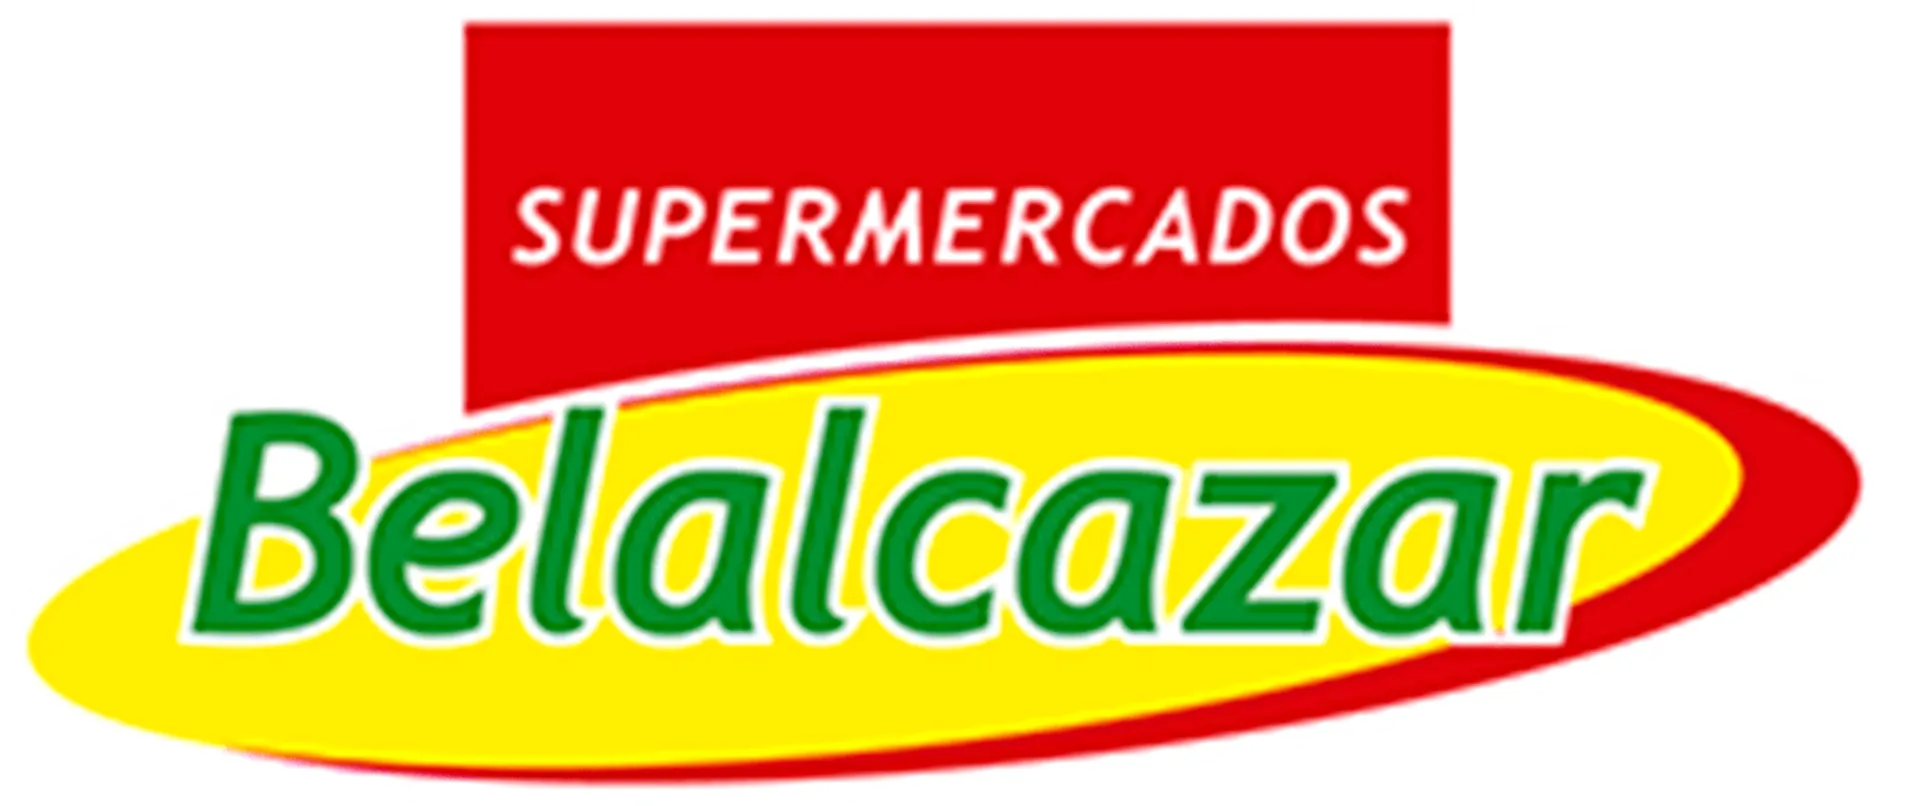 SUPERMERCADOS BELALCAZAR logo de catálogo